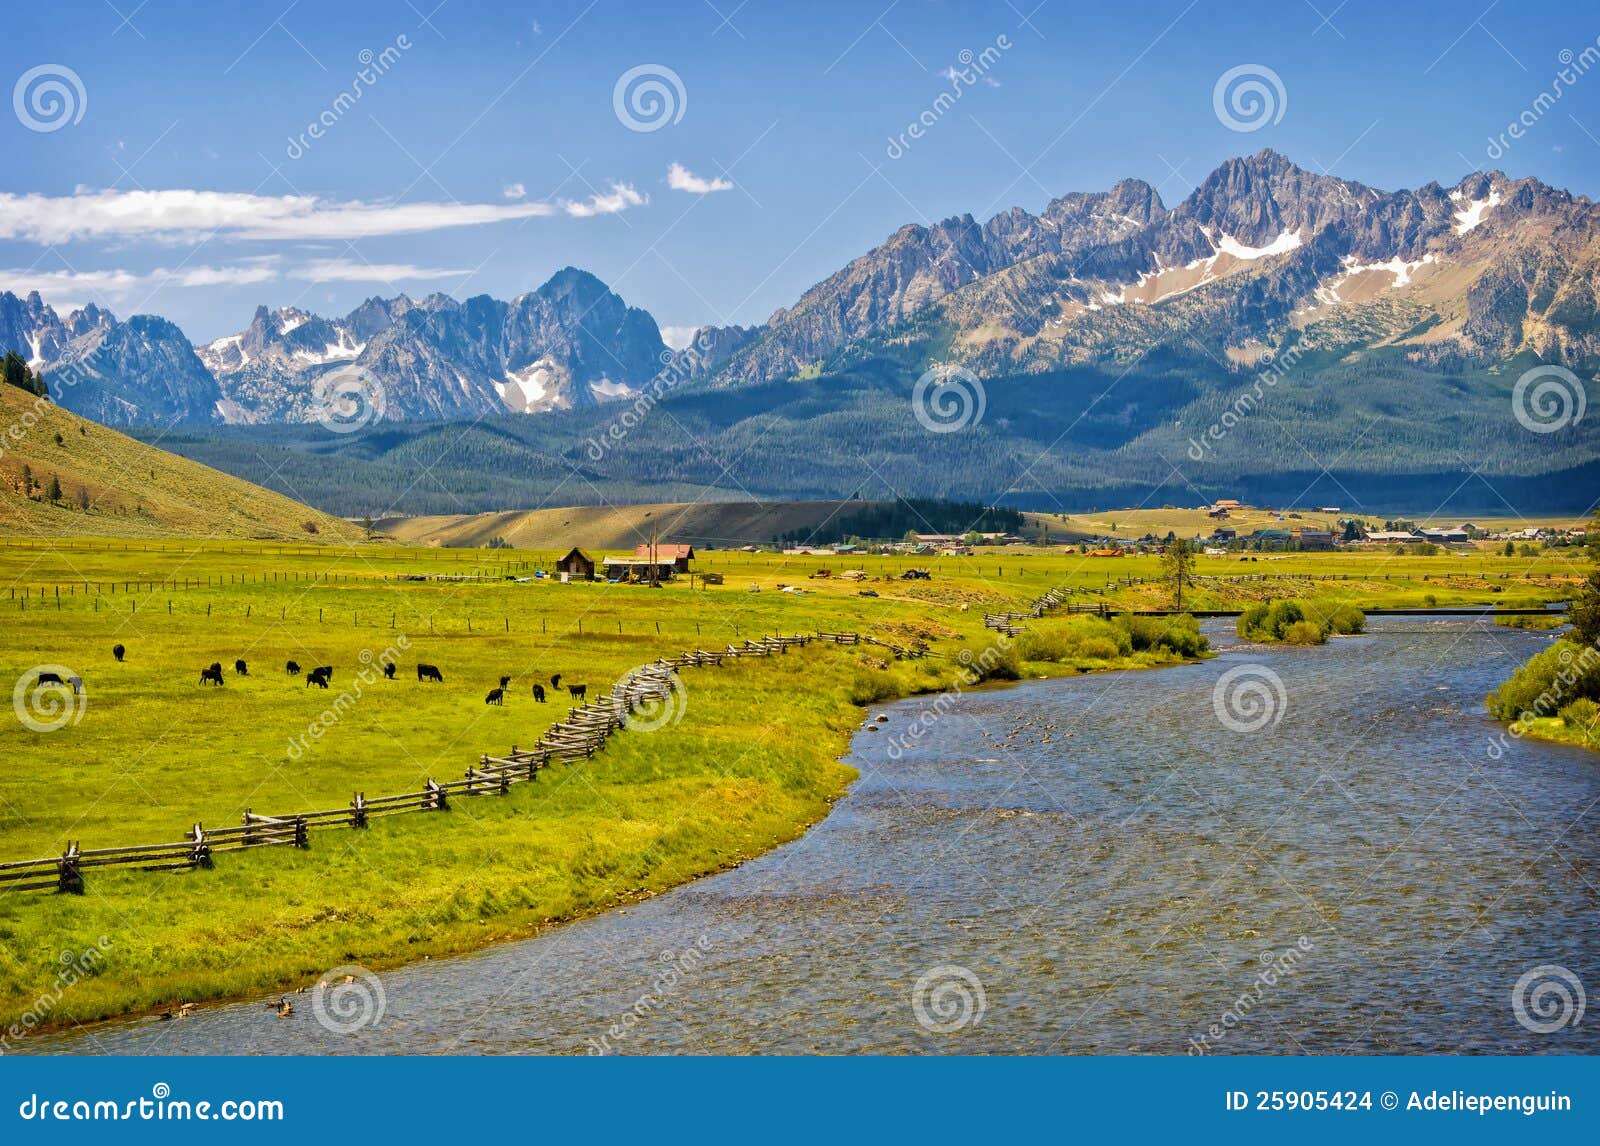 river, ranch and mountains, idaho